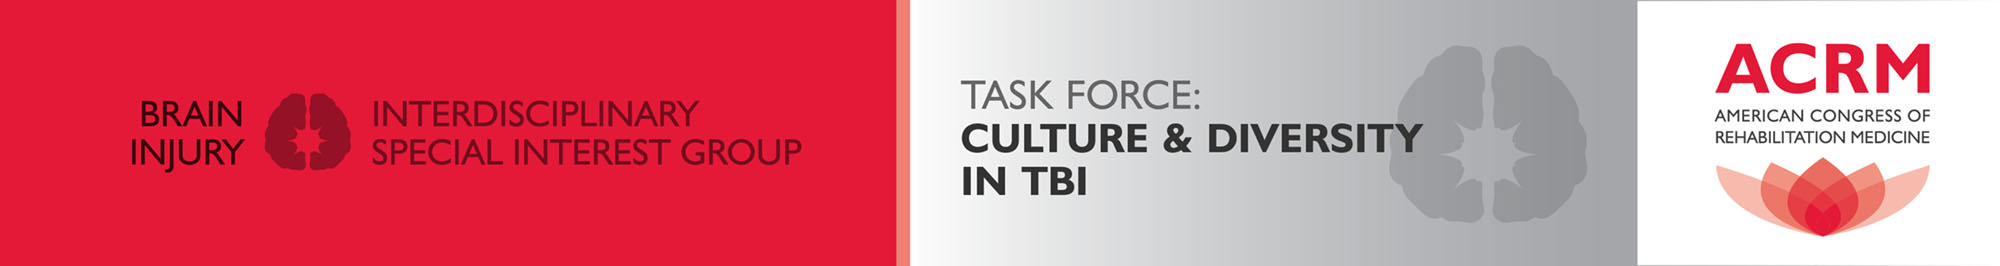 BI-ISIG Culture & Diversity in TBI Task Force